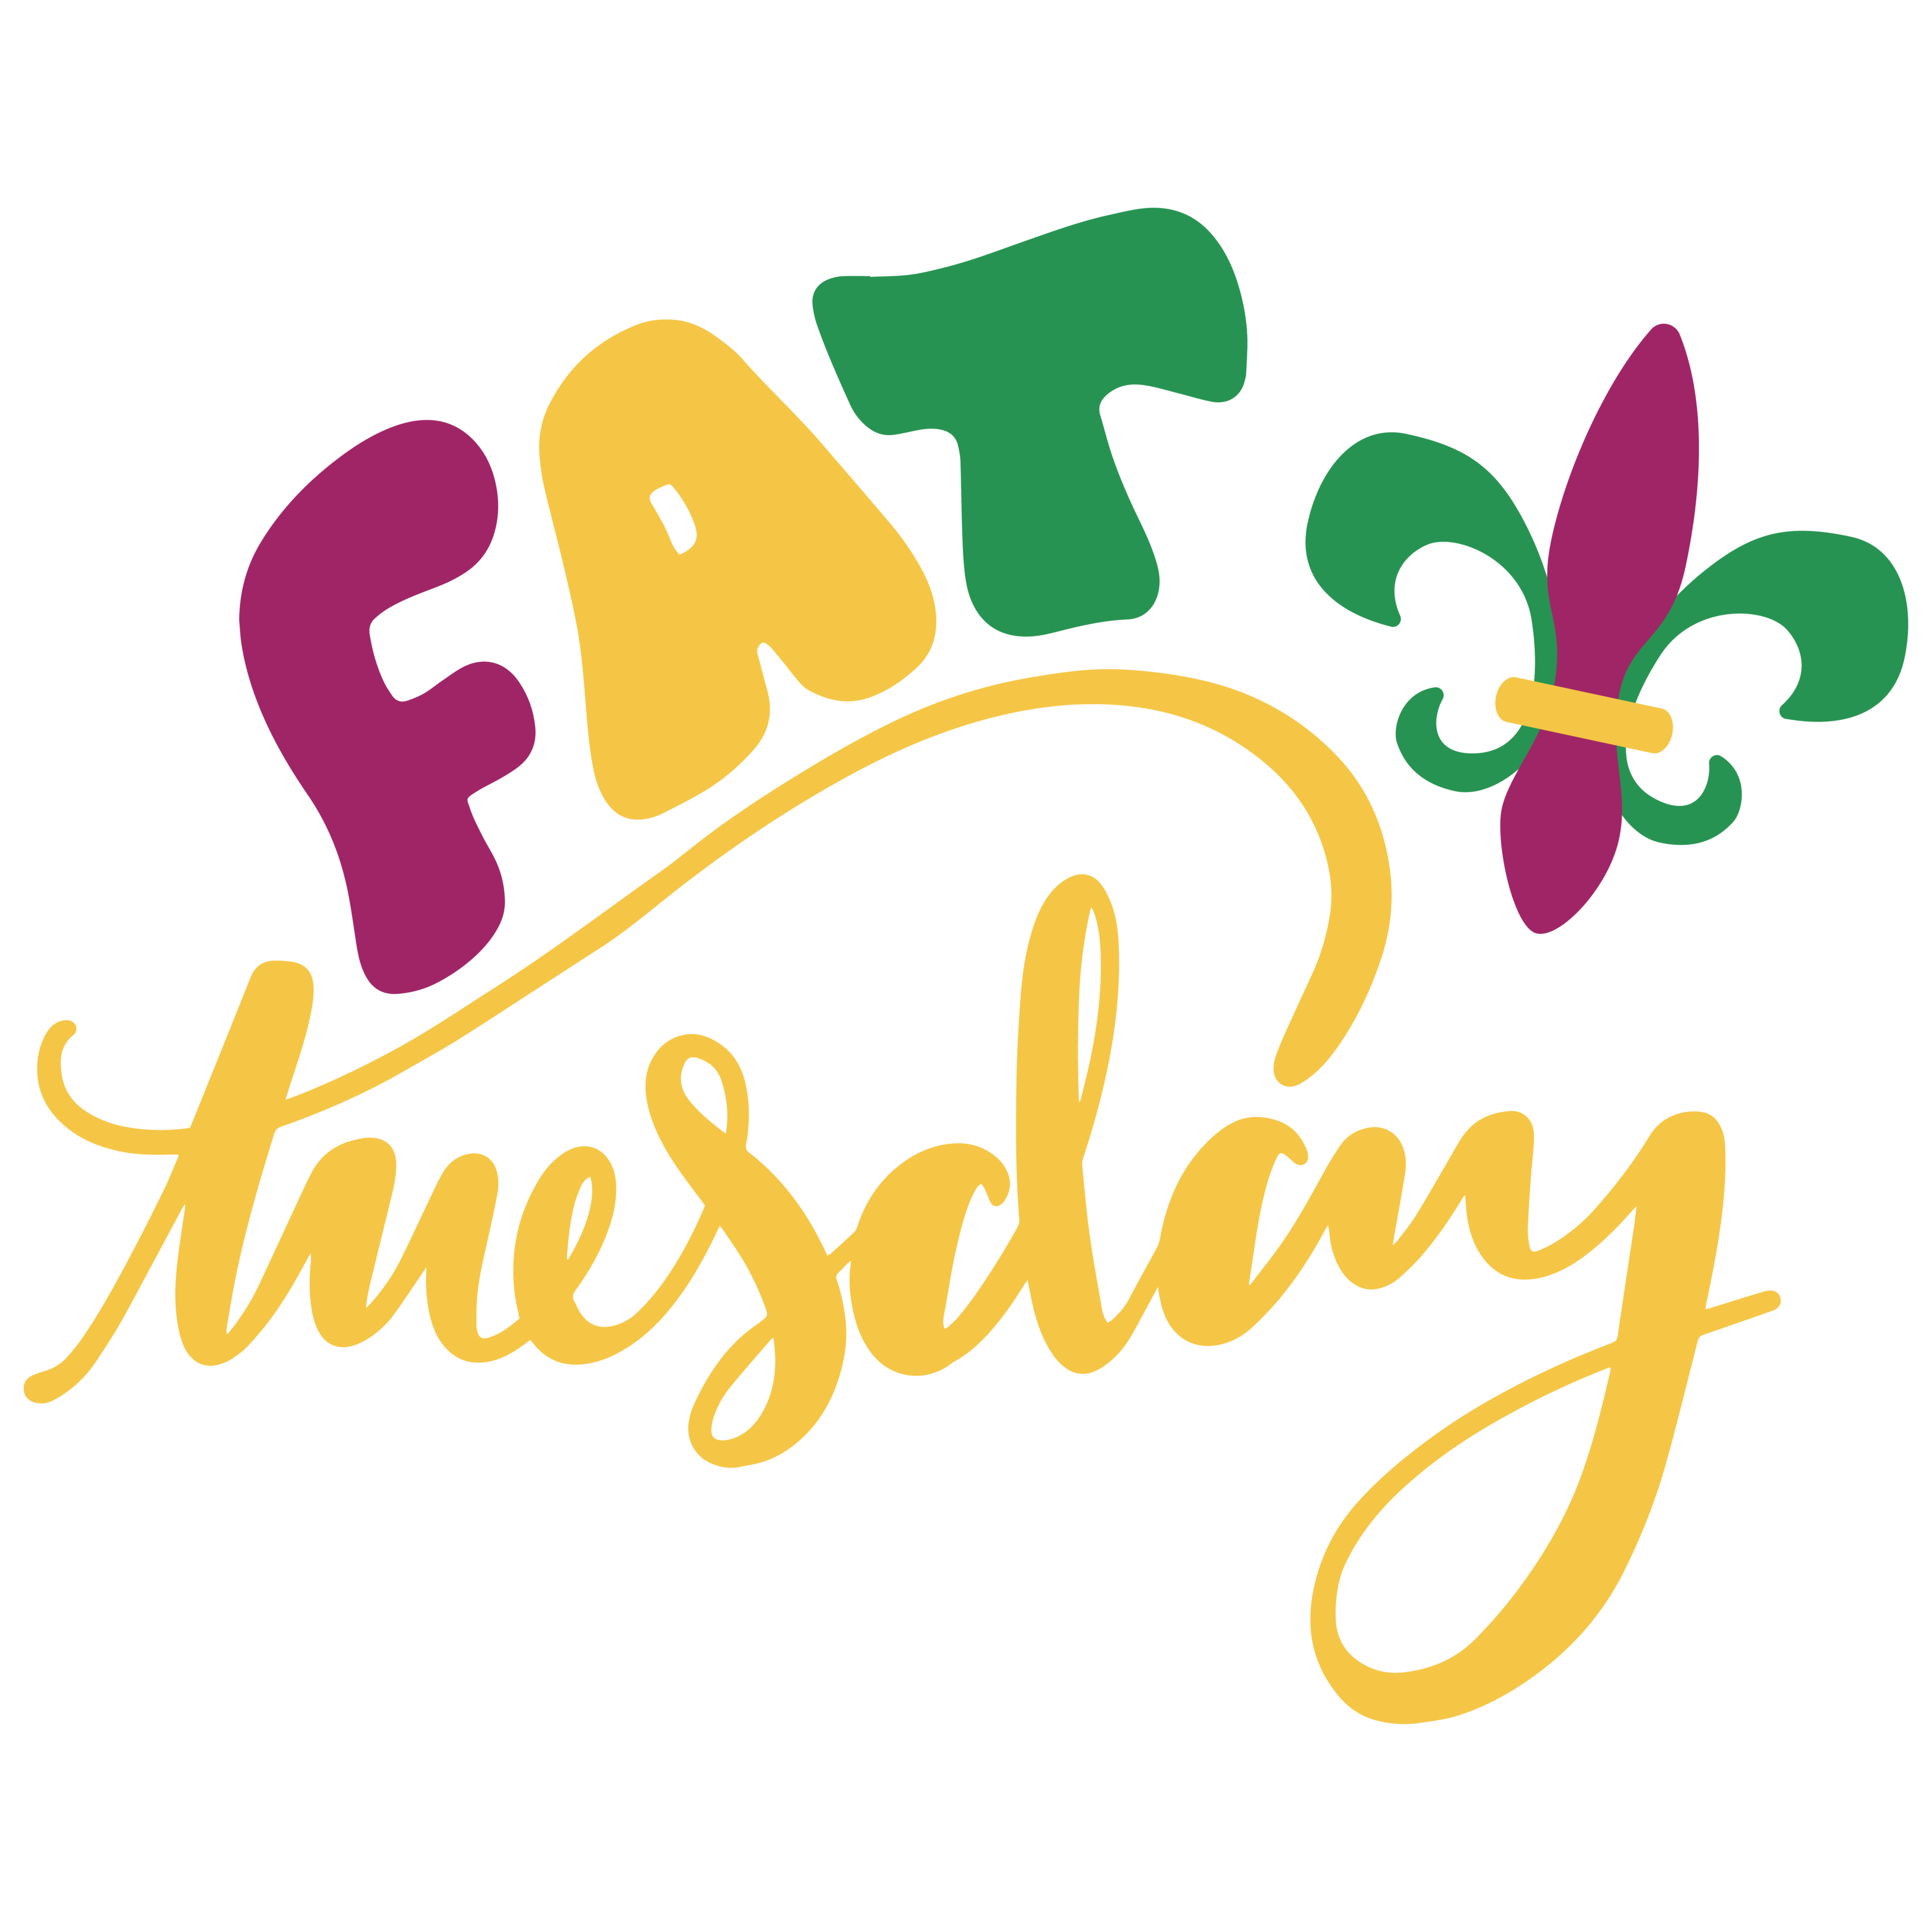 Fat Tuesday illustration